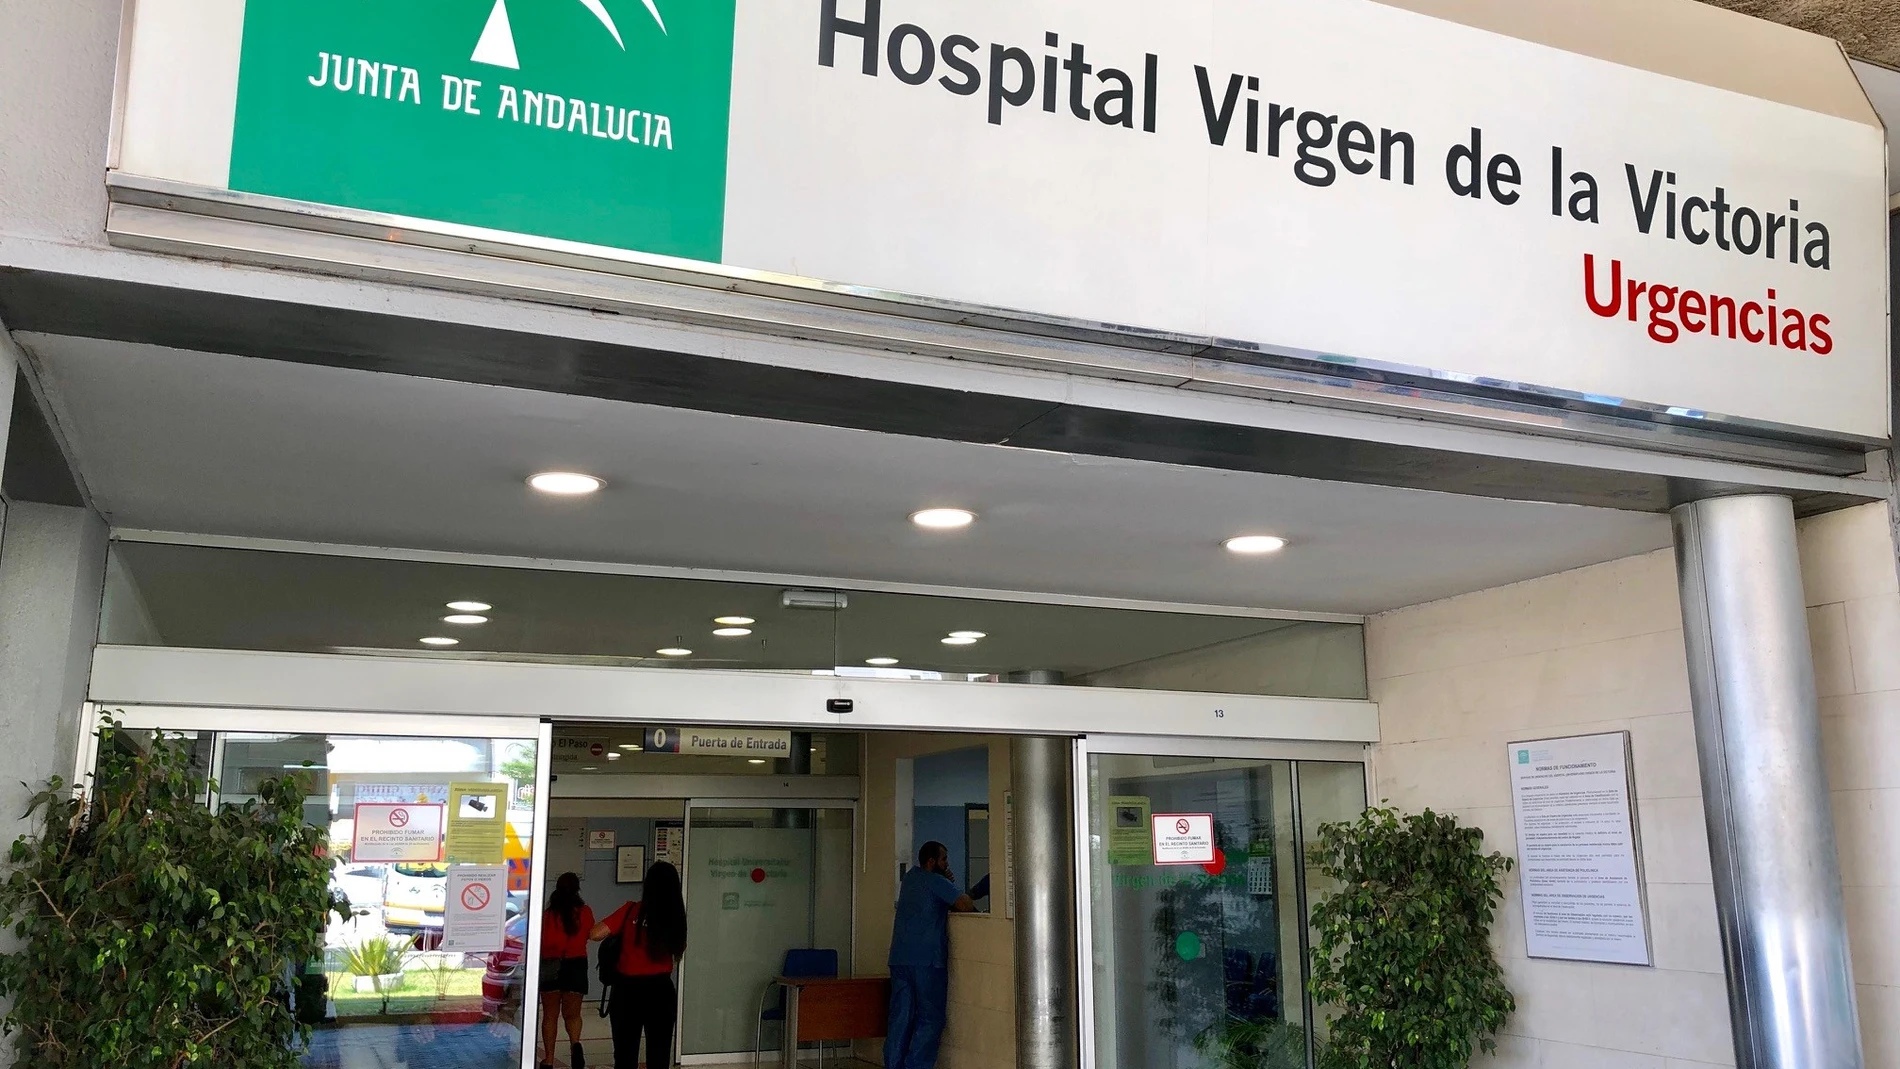 Málaga.-Corovonavirus.- AV.- Un nuevo caso de coronavirus en Málaga, eleva a 13 los casos confirmados en Andalucía